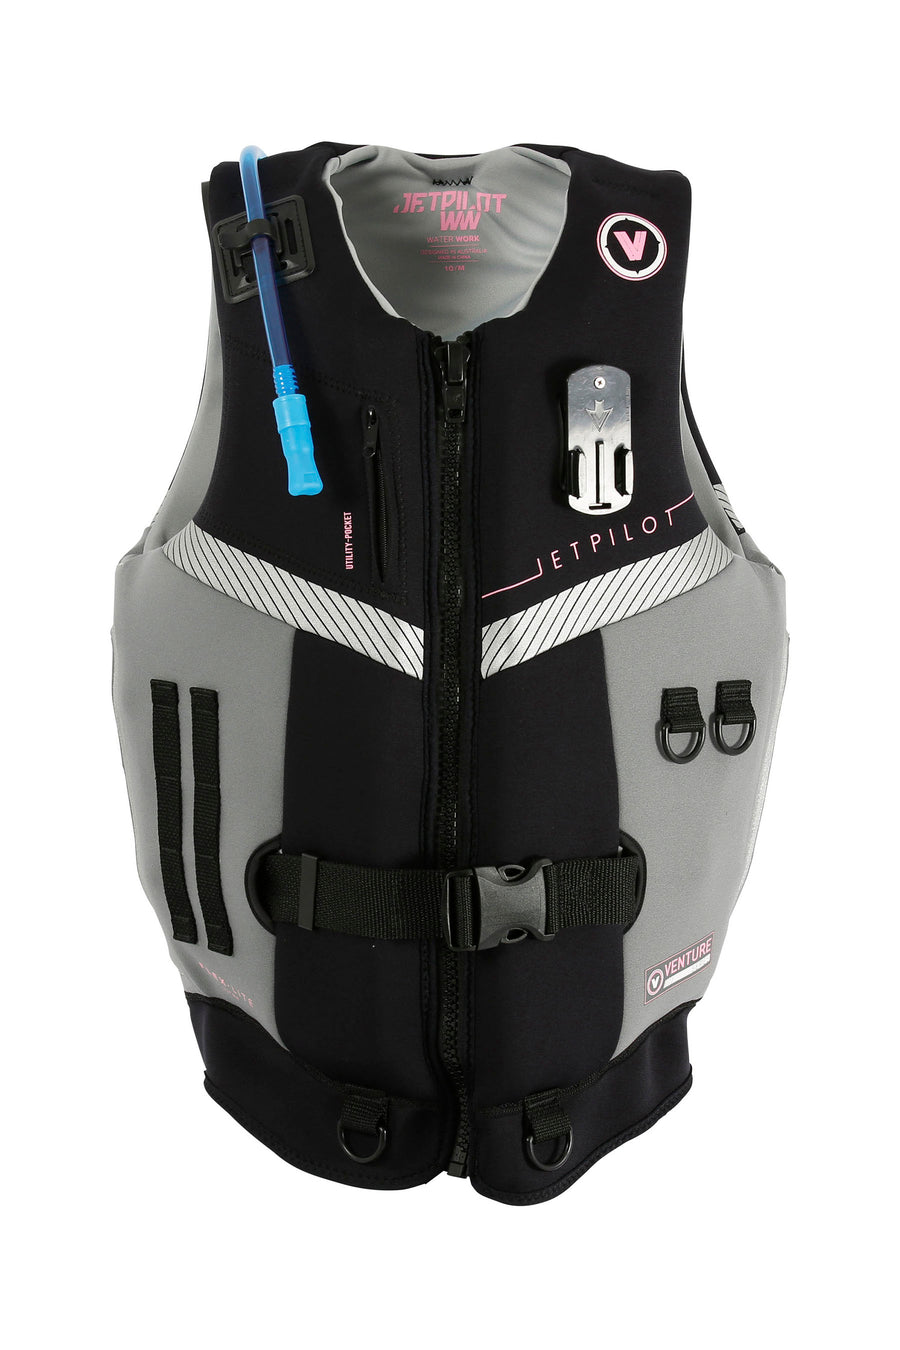 Jetpilot Venture Ladies Neo Life Jacket